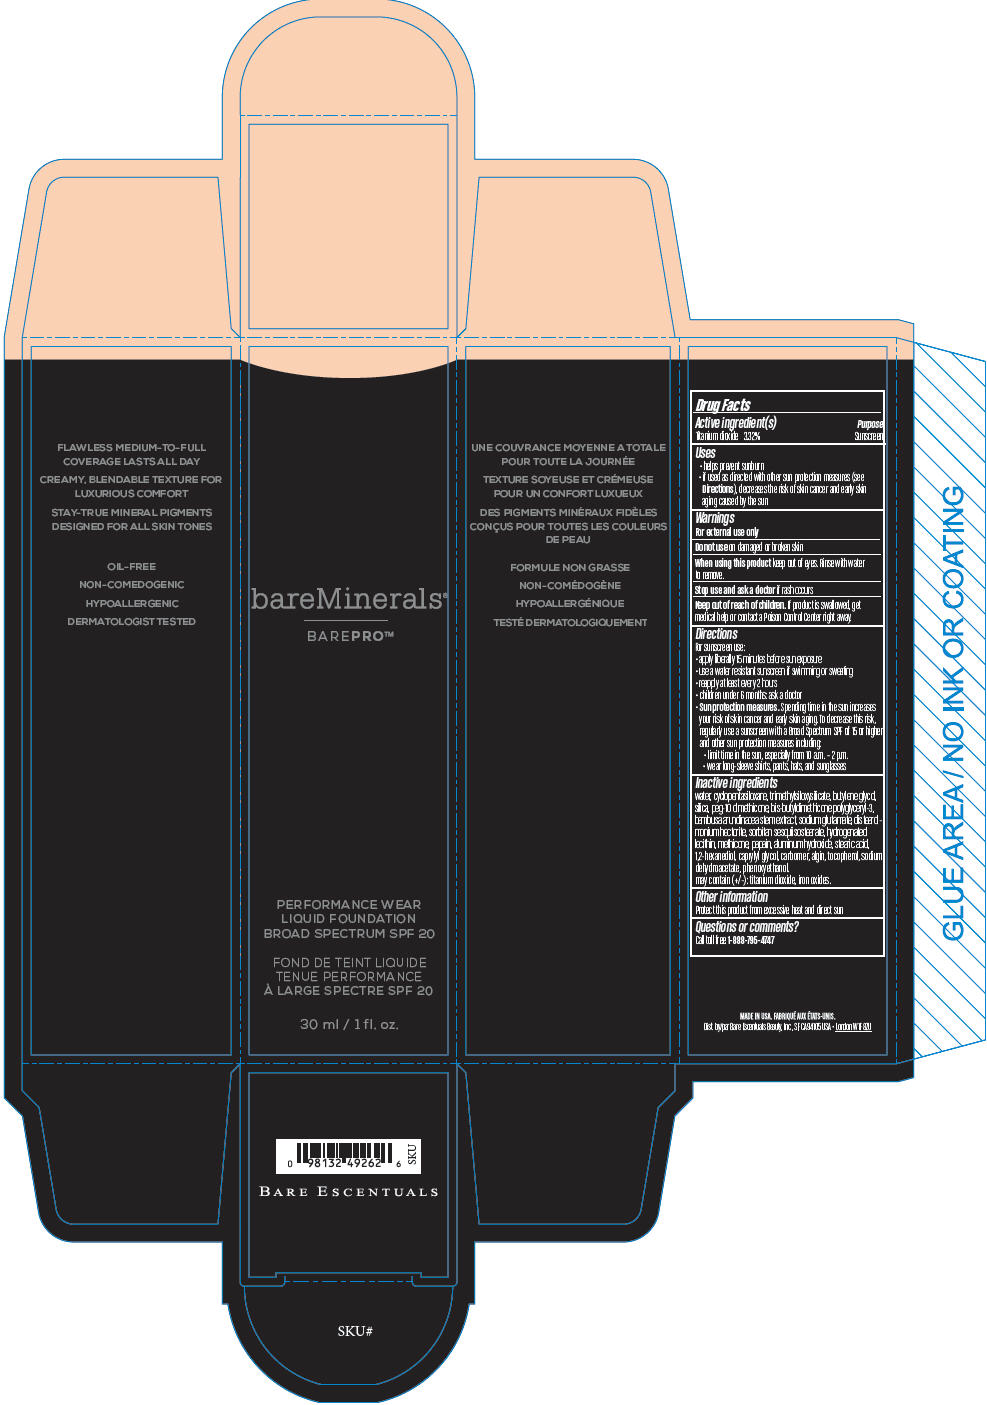 PRINCIPAL DISPLAY PANEL - 30 ml Bottle Carton - Sateen 05